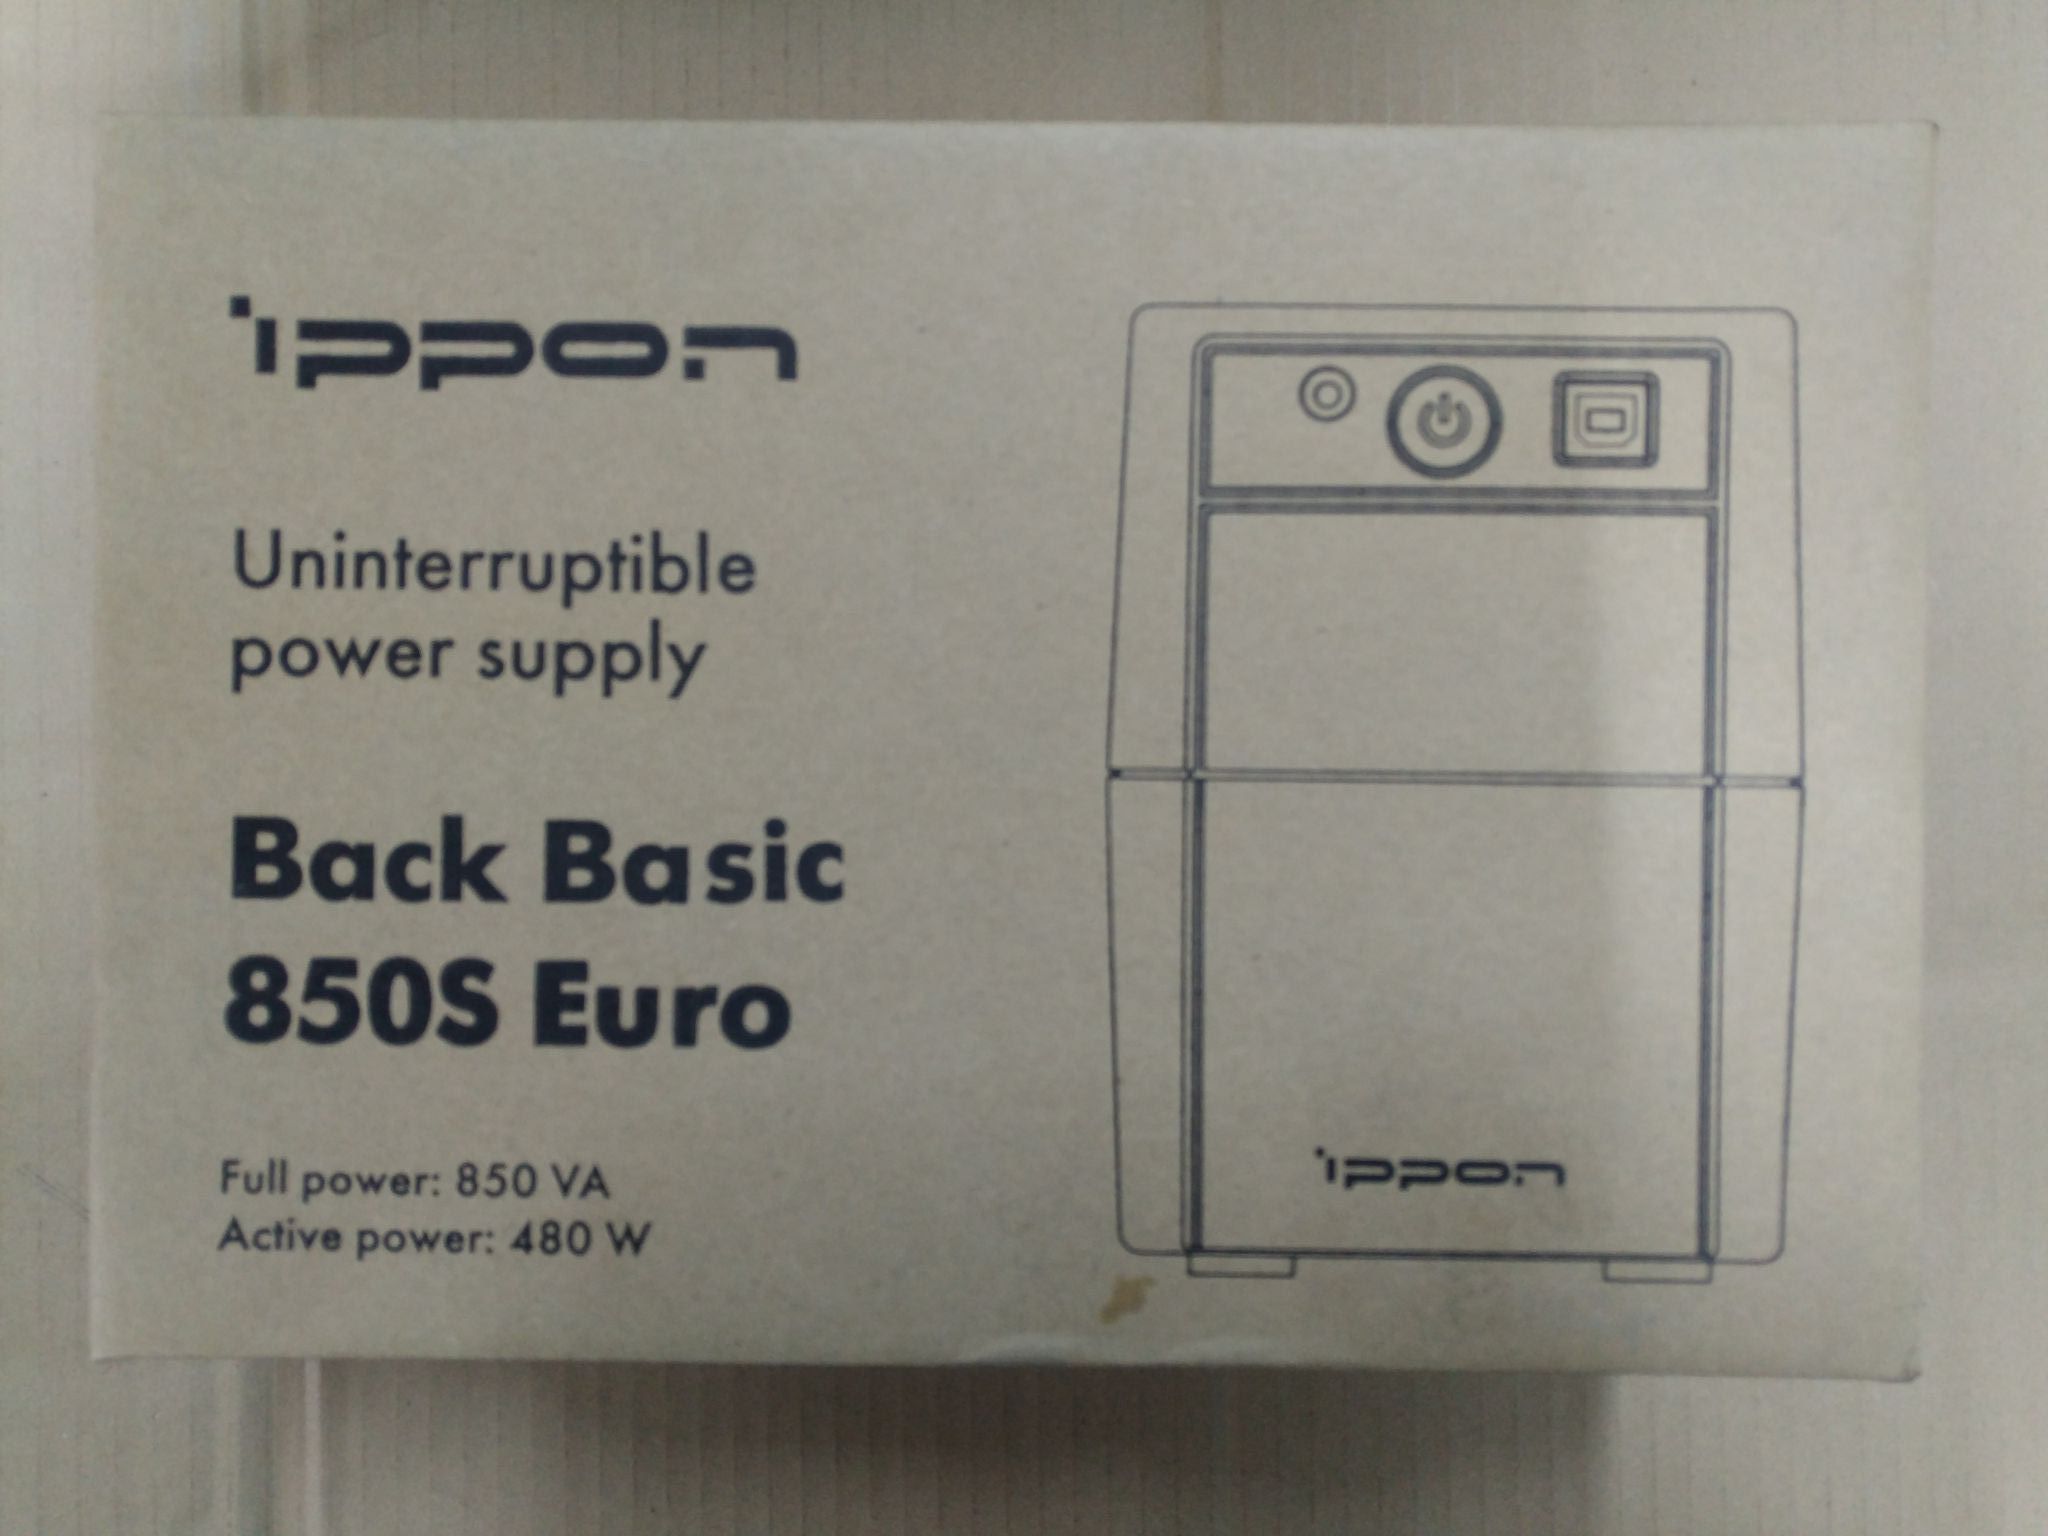 Back basic 850s. ИБП Ippon back Basic 850. Ippon back Basic 850s Euro. ИПБ Ippon back Basic 850s Euro, a. ИБП Ippon back Basic 850s Euro.